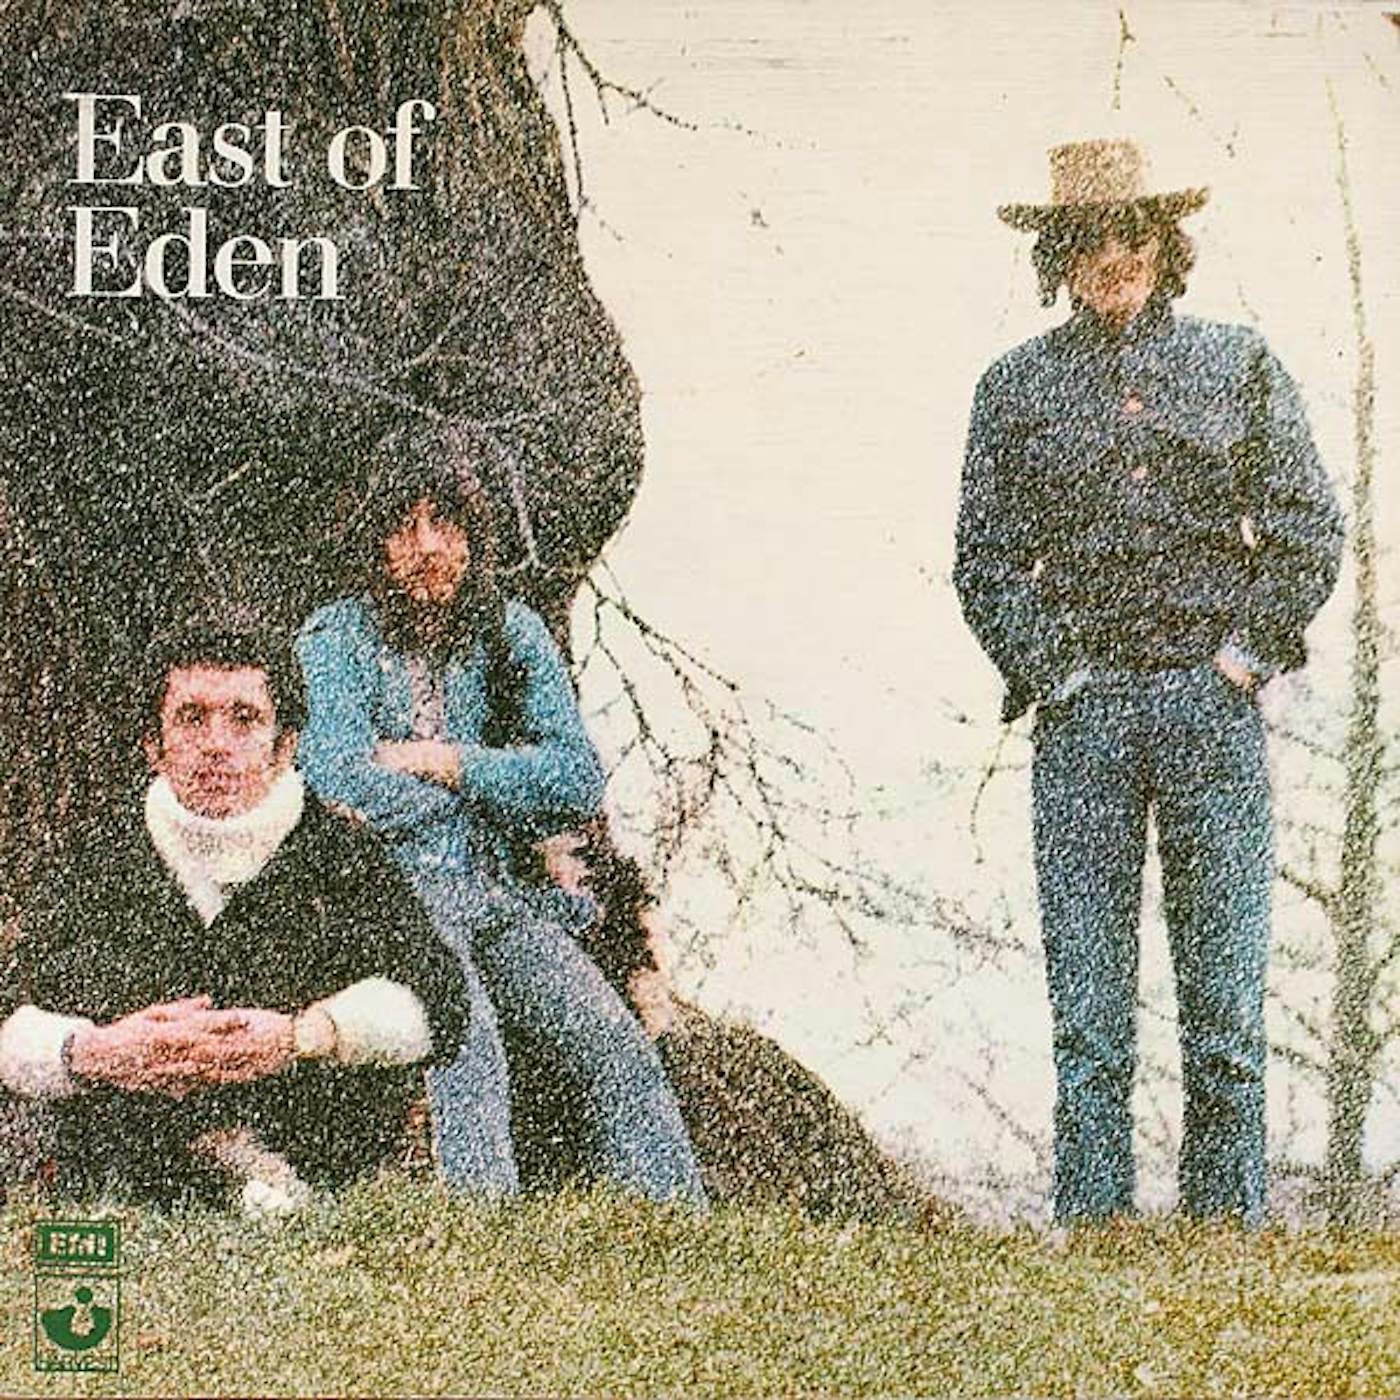 East Of Eden Vinyl Record